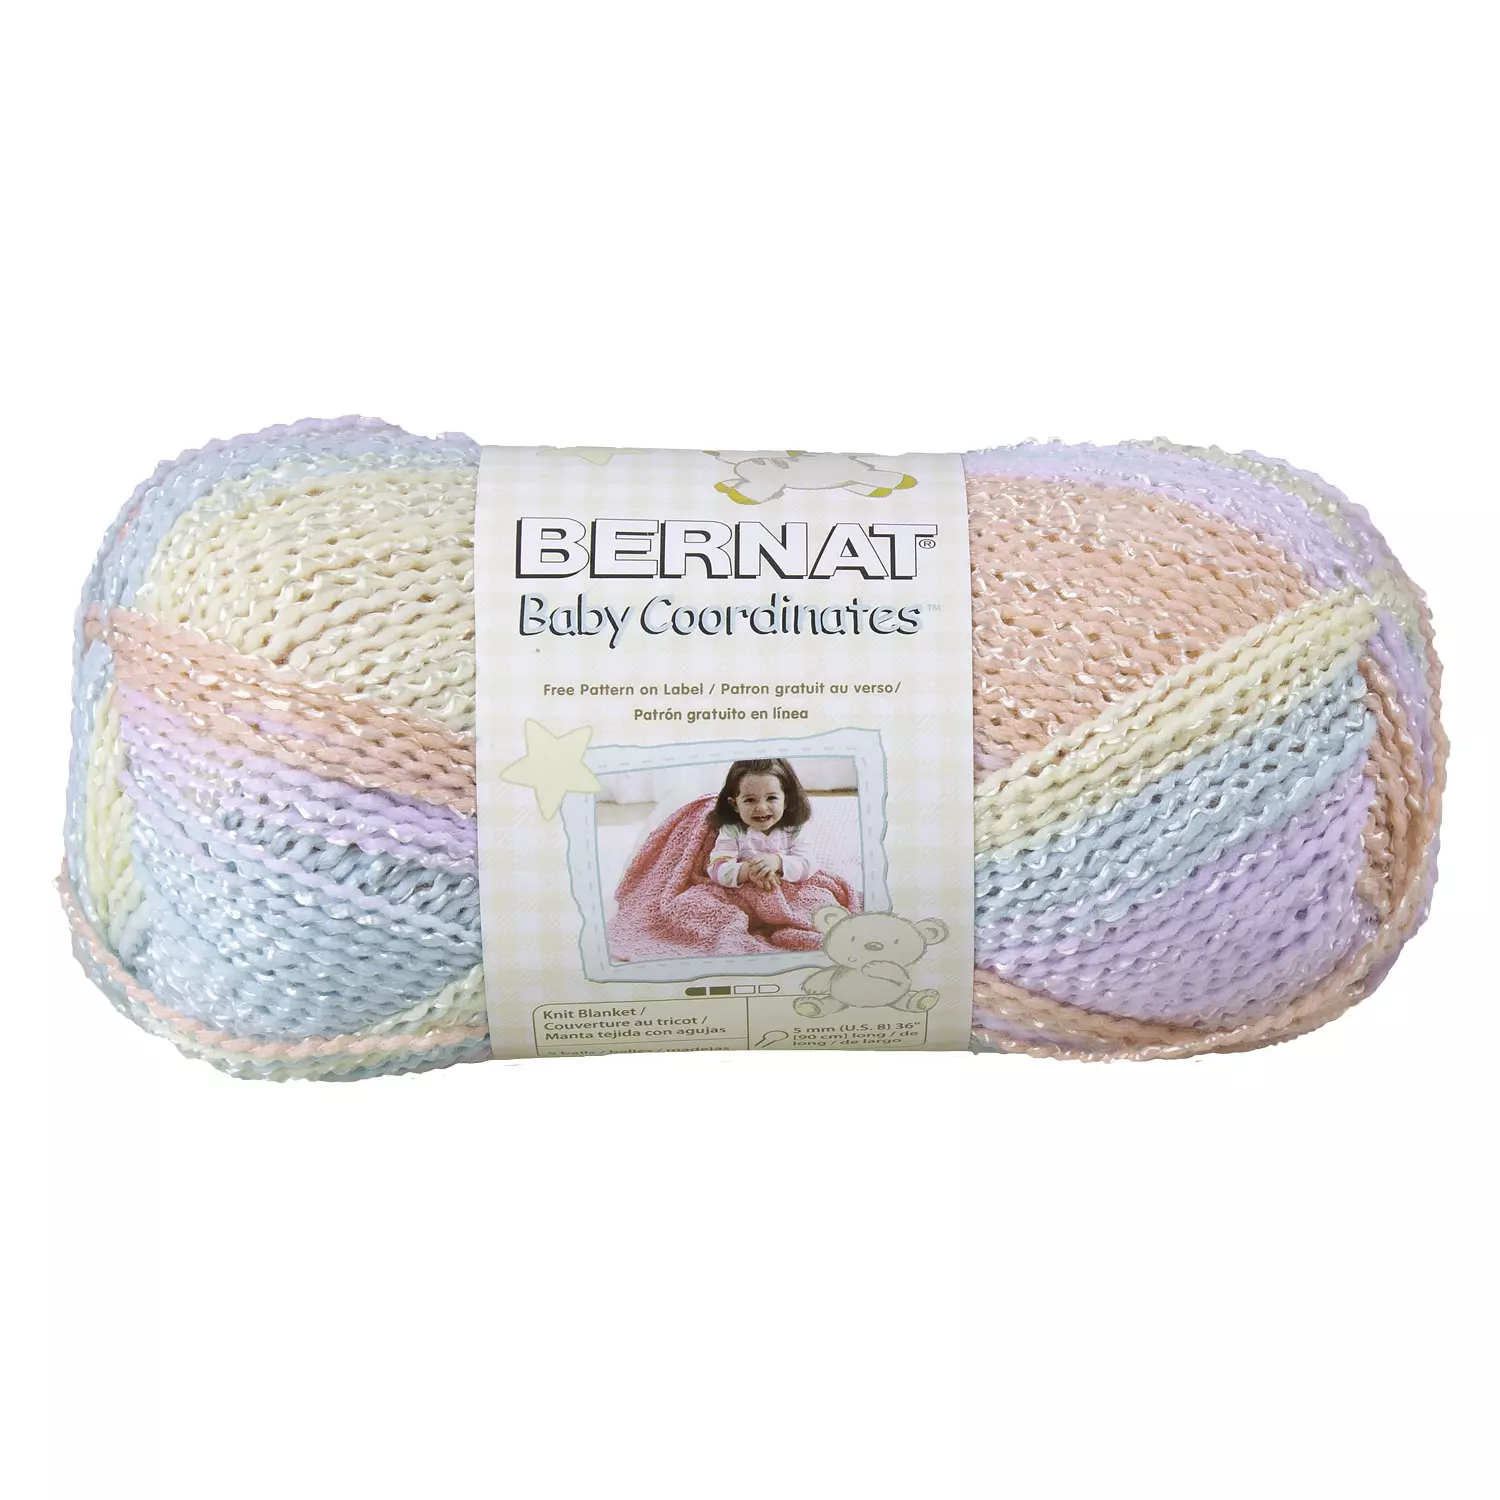 Bernat Baby Coordinates - Yarn, candy